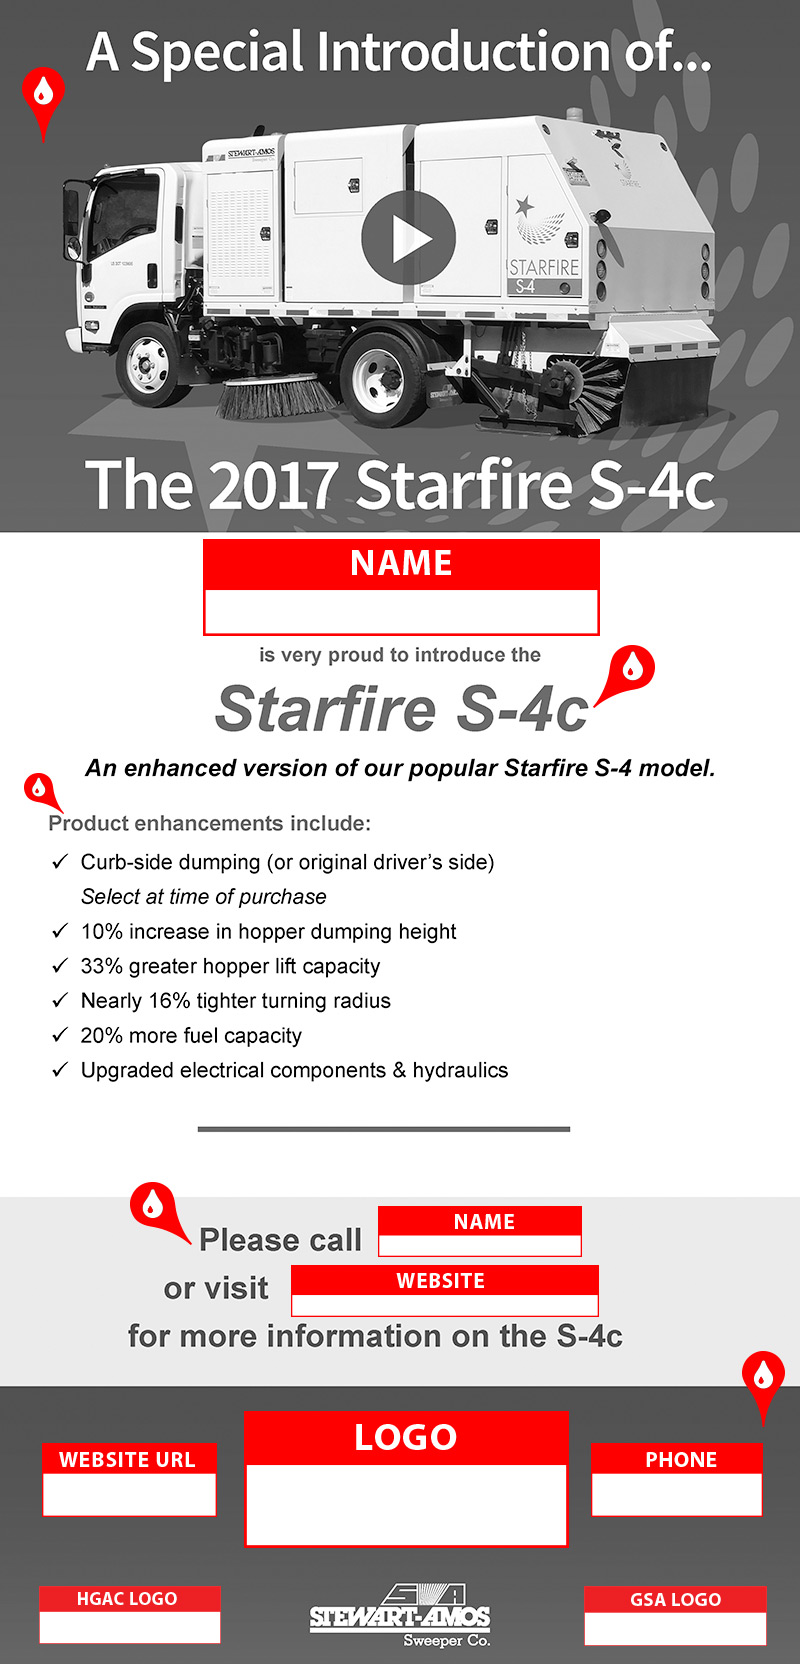 Starfire S-4c email black and white